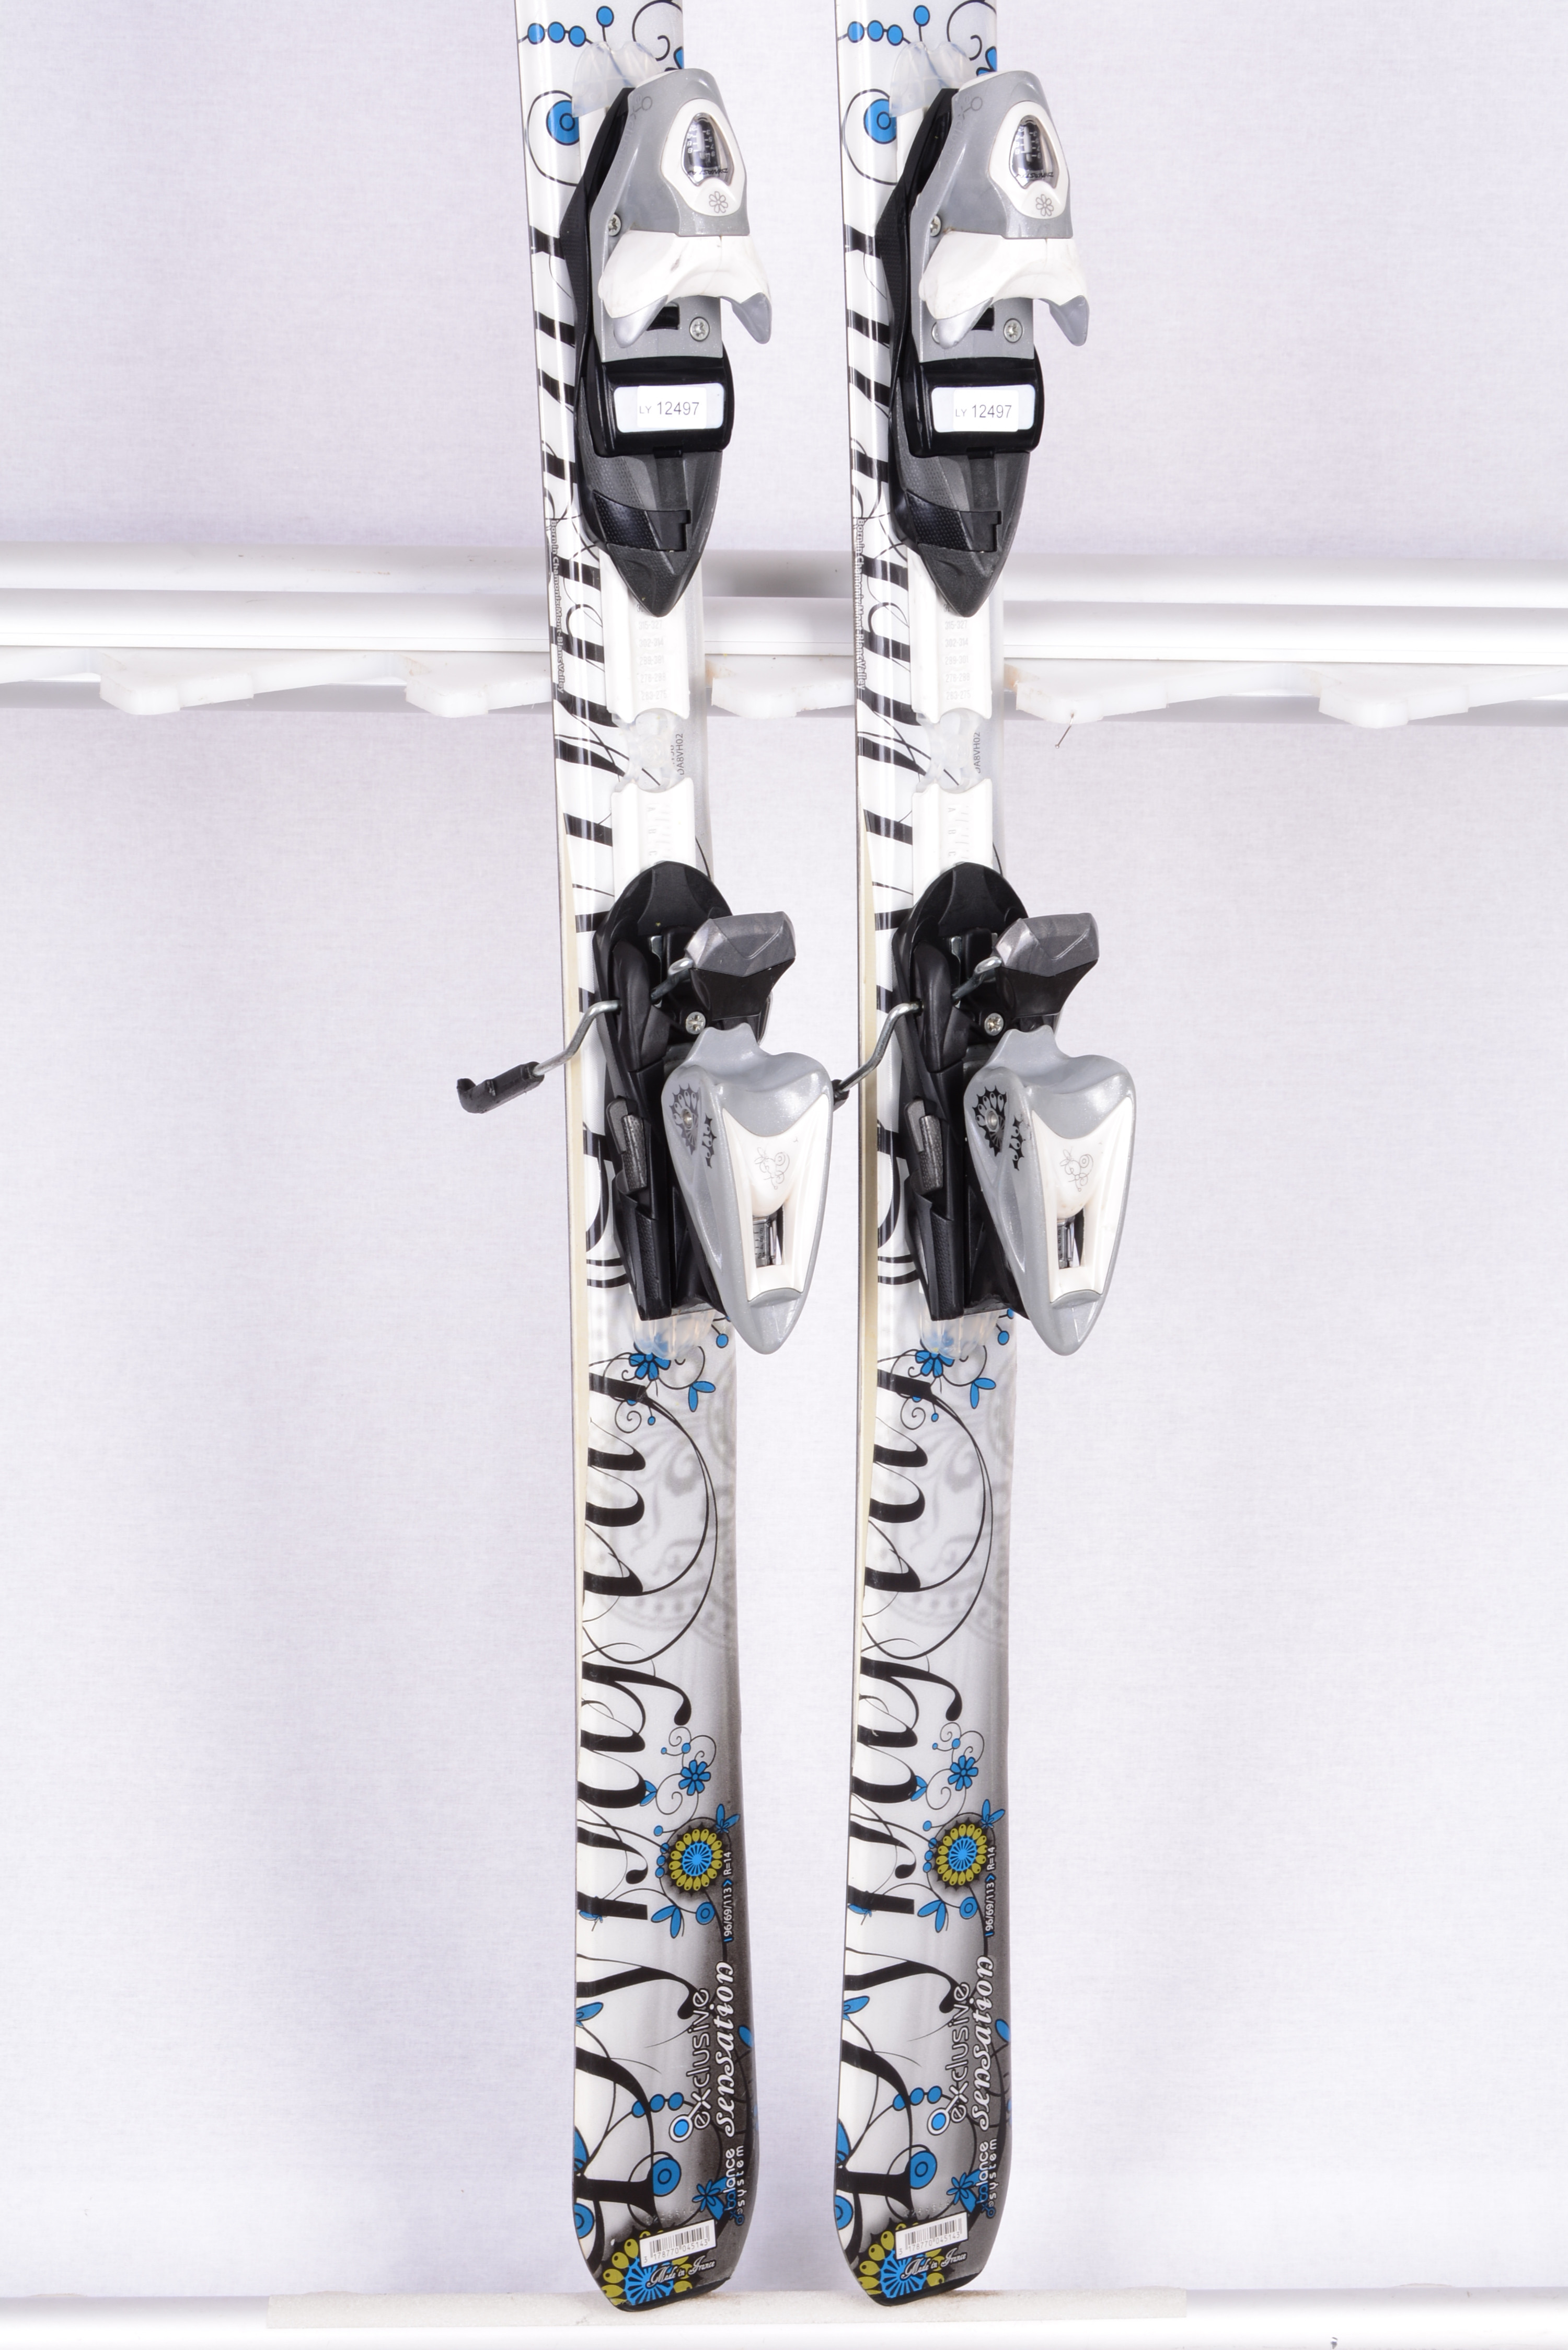 ski's DYNASTAR SENSATION, lance system + Exclusive 9 staat ) - Mardosport.nl